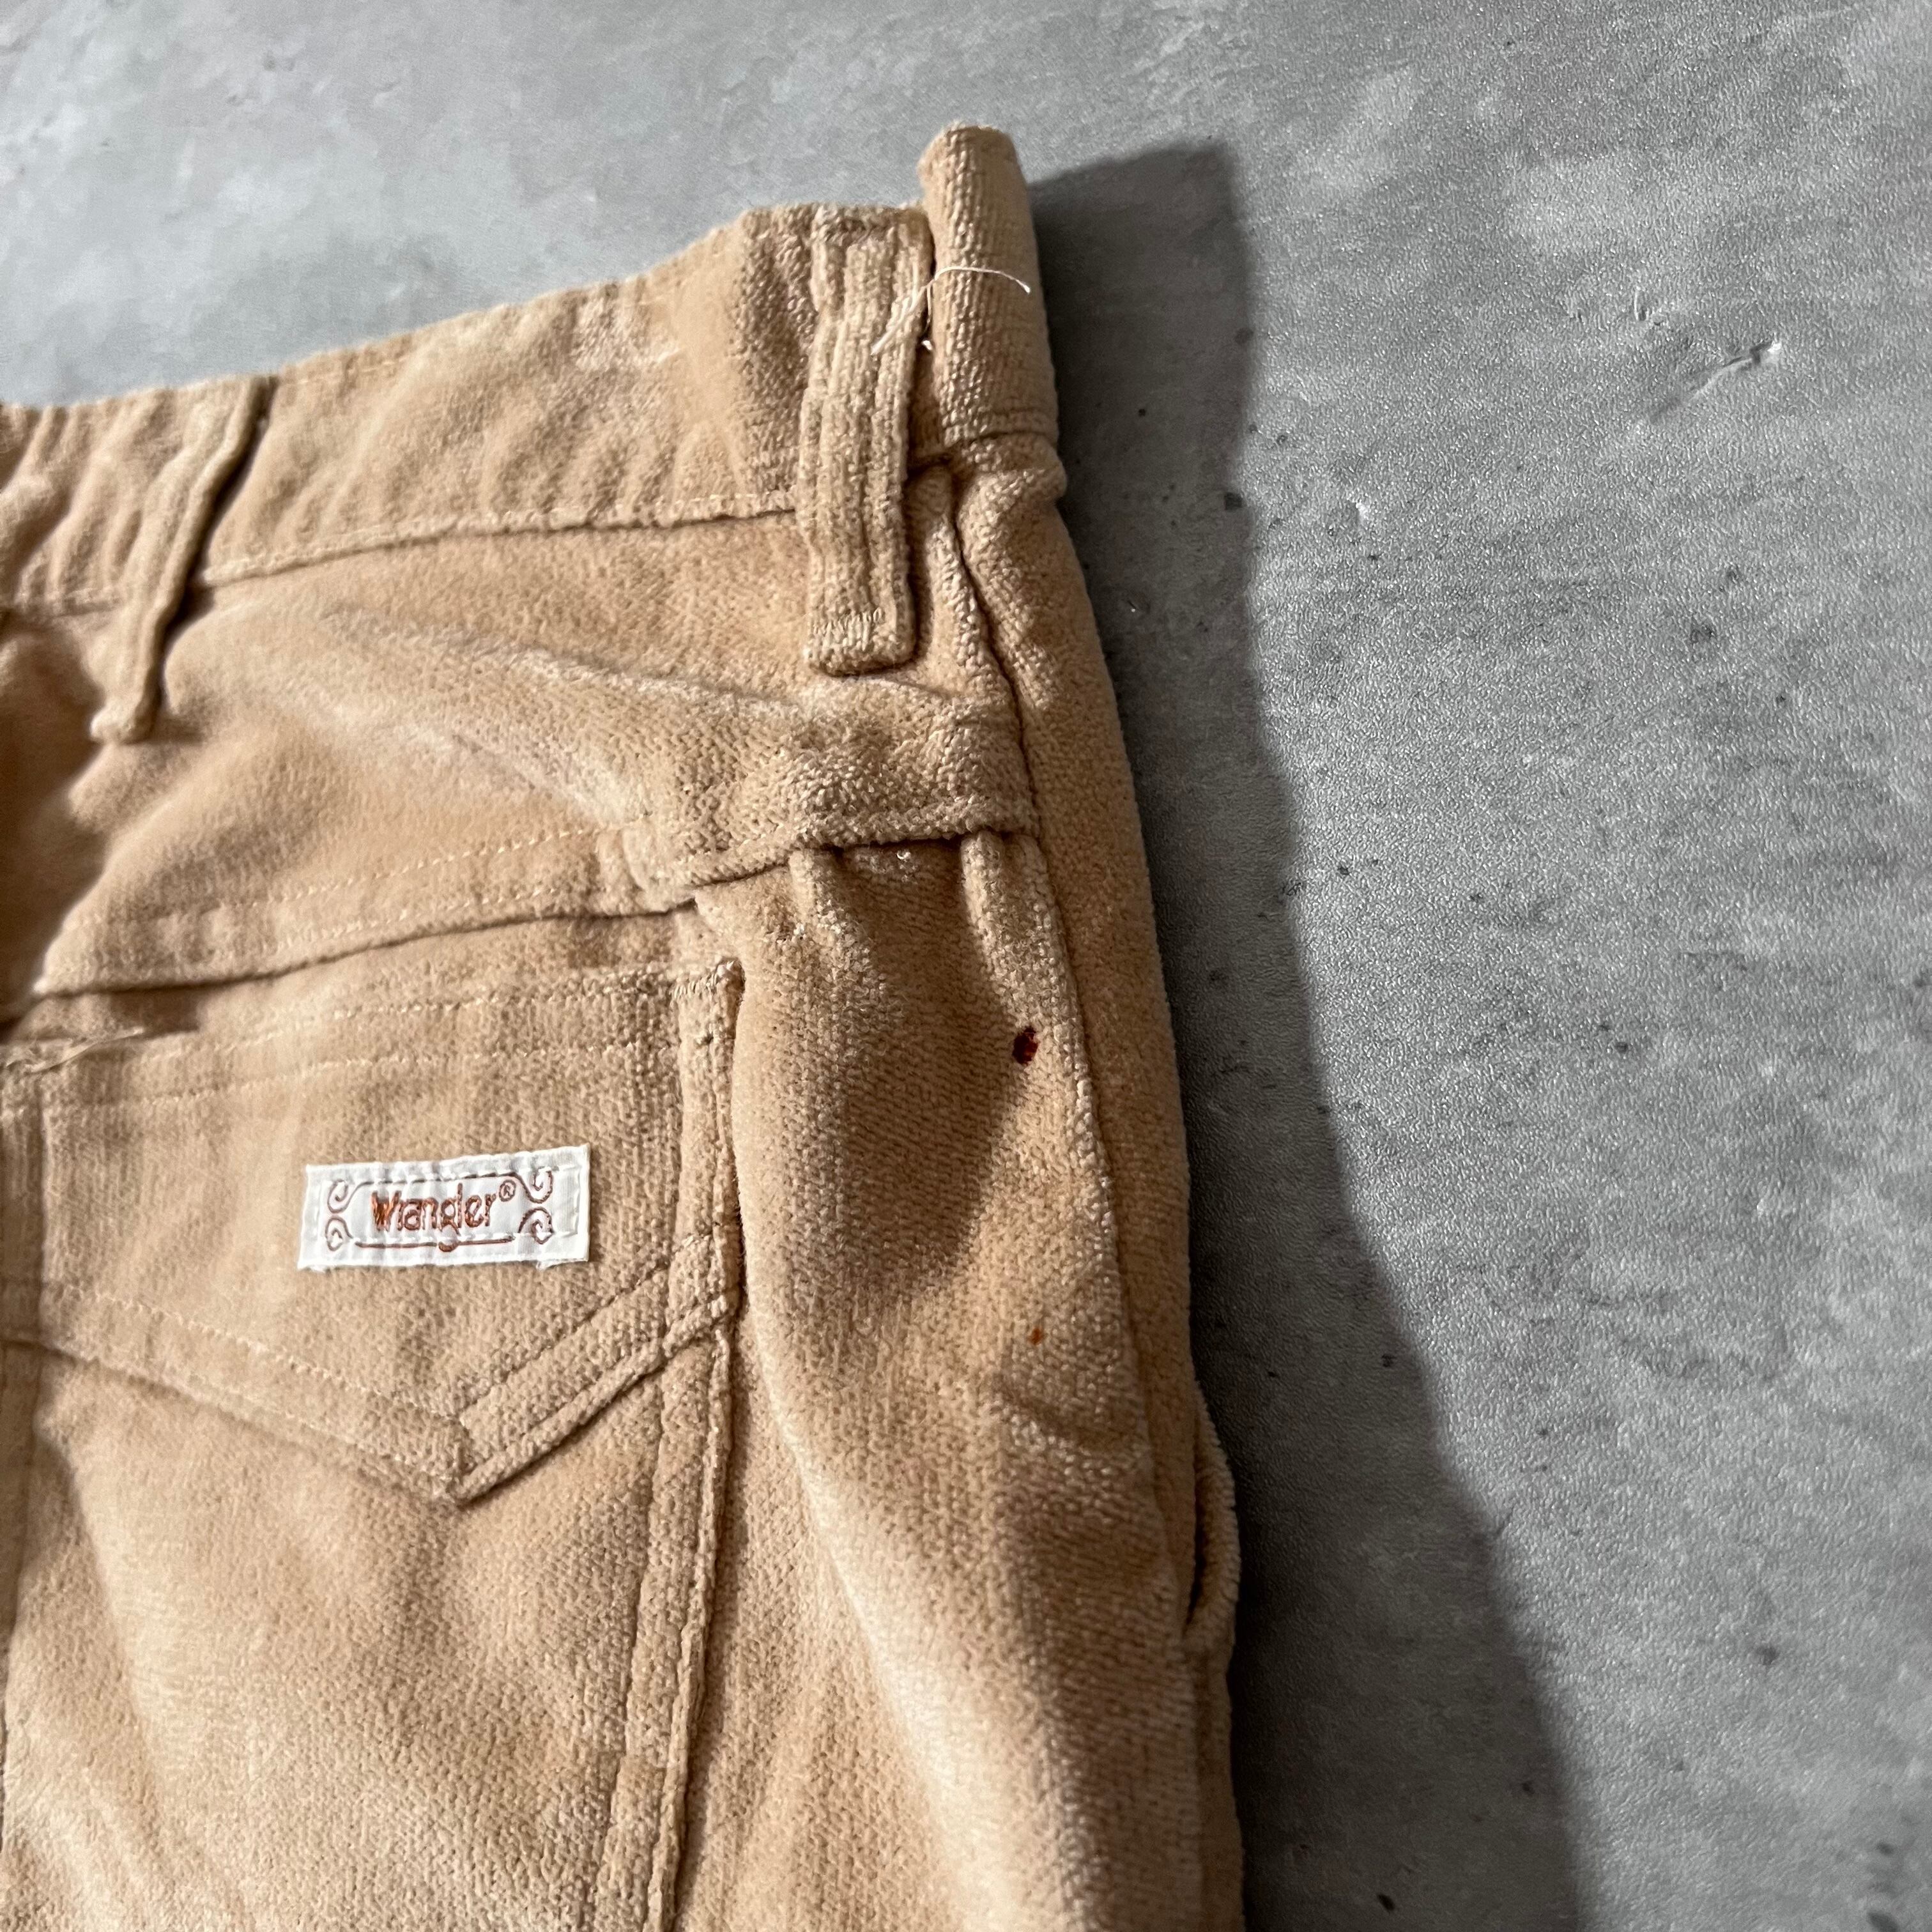 70s “Wrangler” pile cloth work pants made in usa 70年代 ラングラー